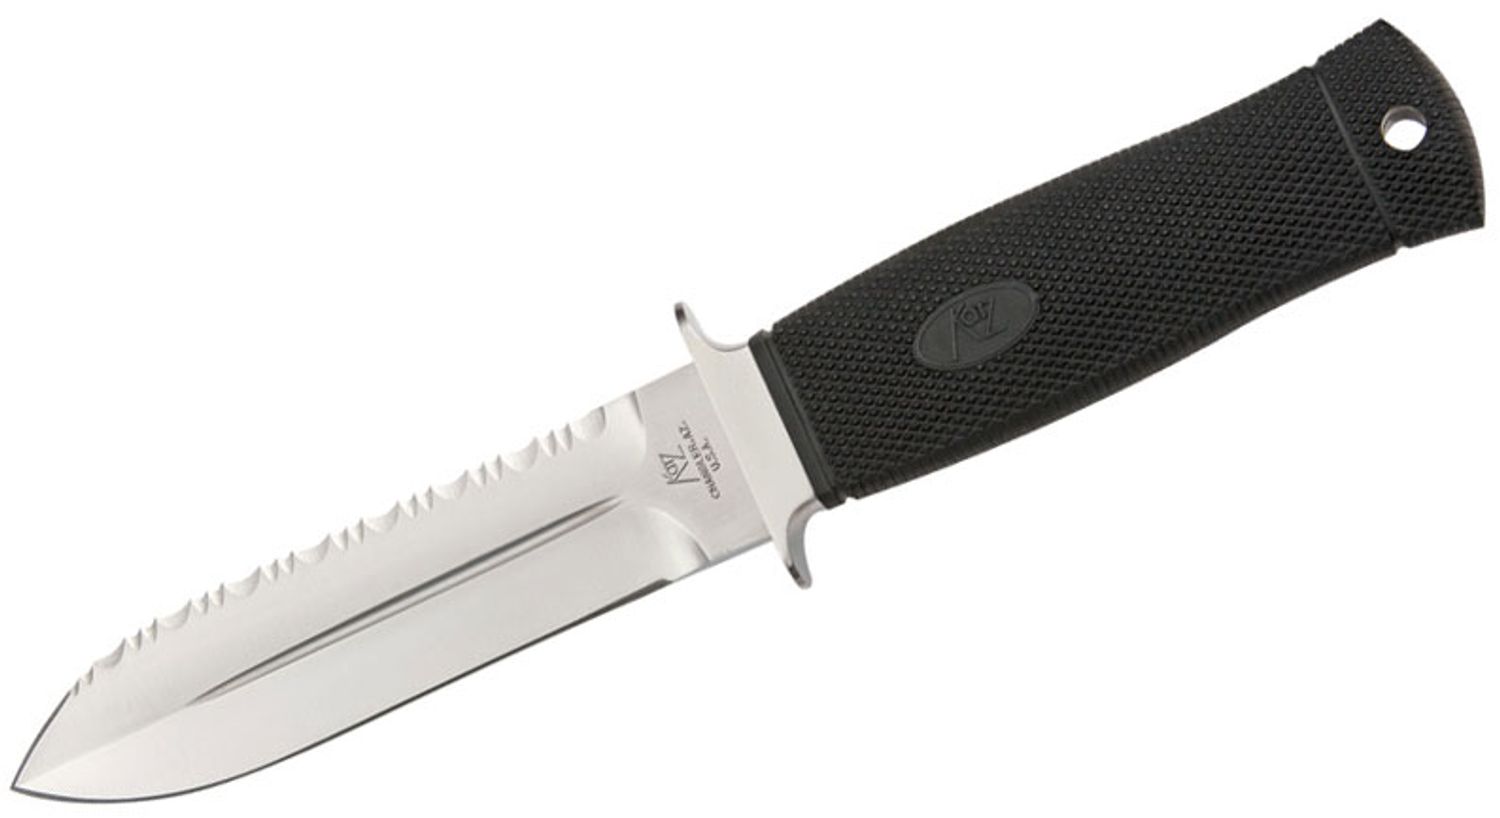 Katz Avenger Boot Knife Fixed 4 375 Double Edge Blade With Serrated Top Edge Black Kraton Handle Black Cordura Sheath Knifecenter Bt 10 S